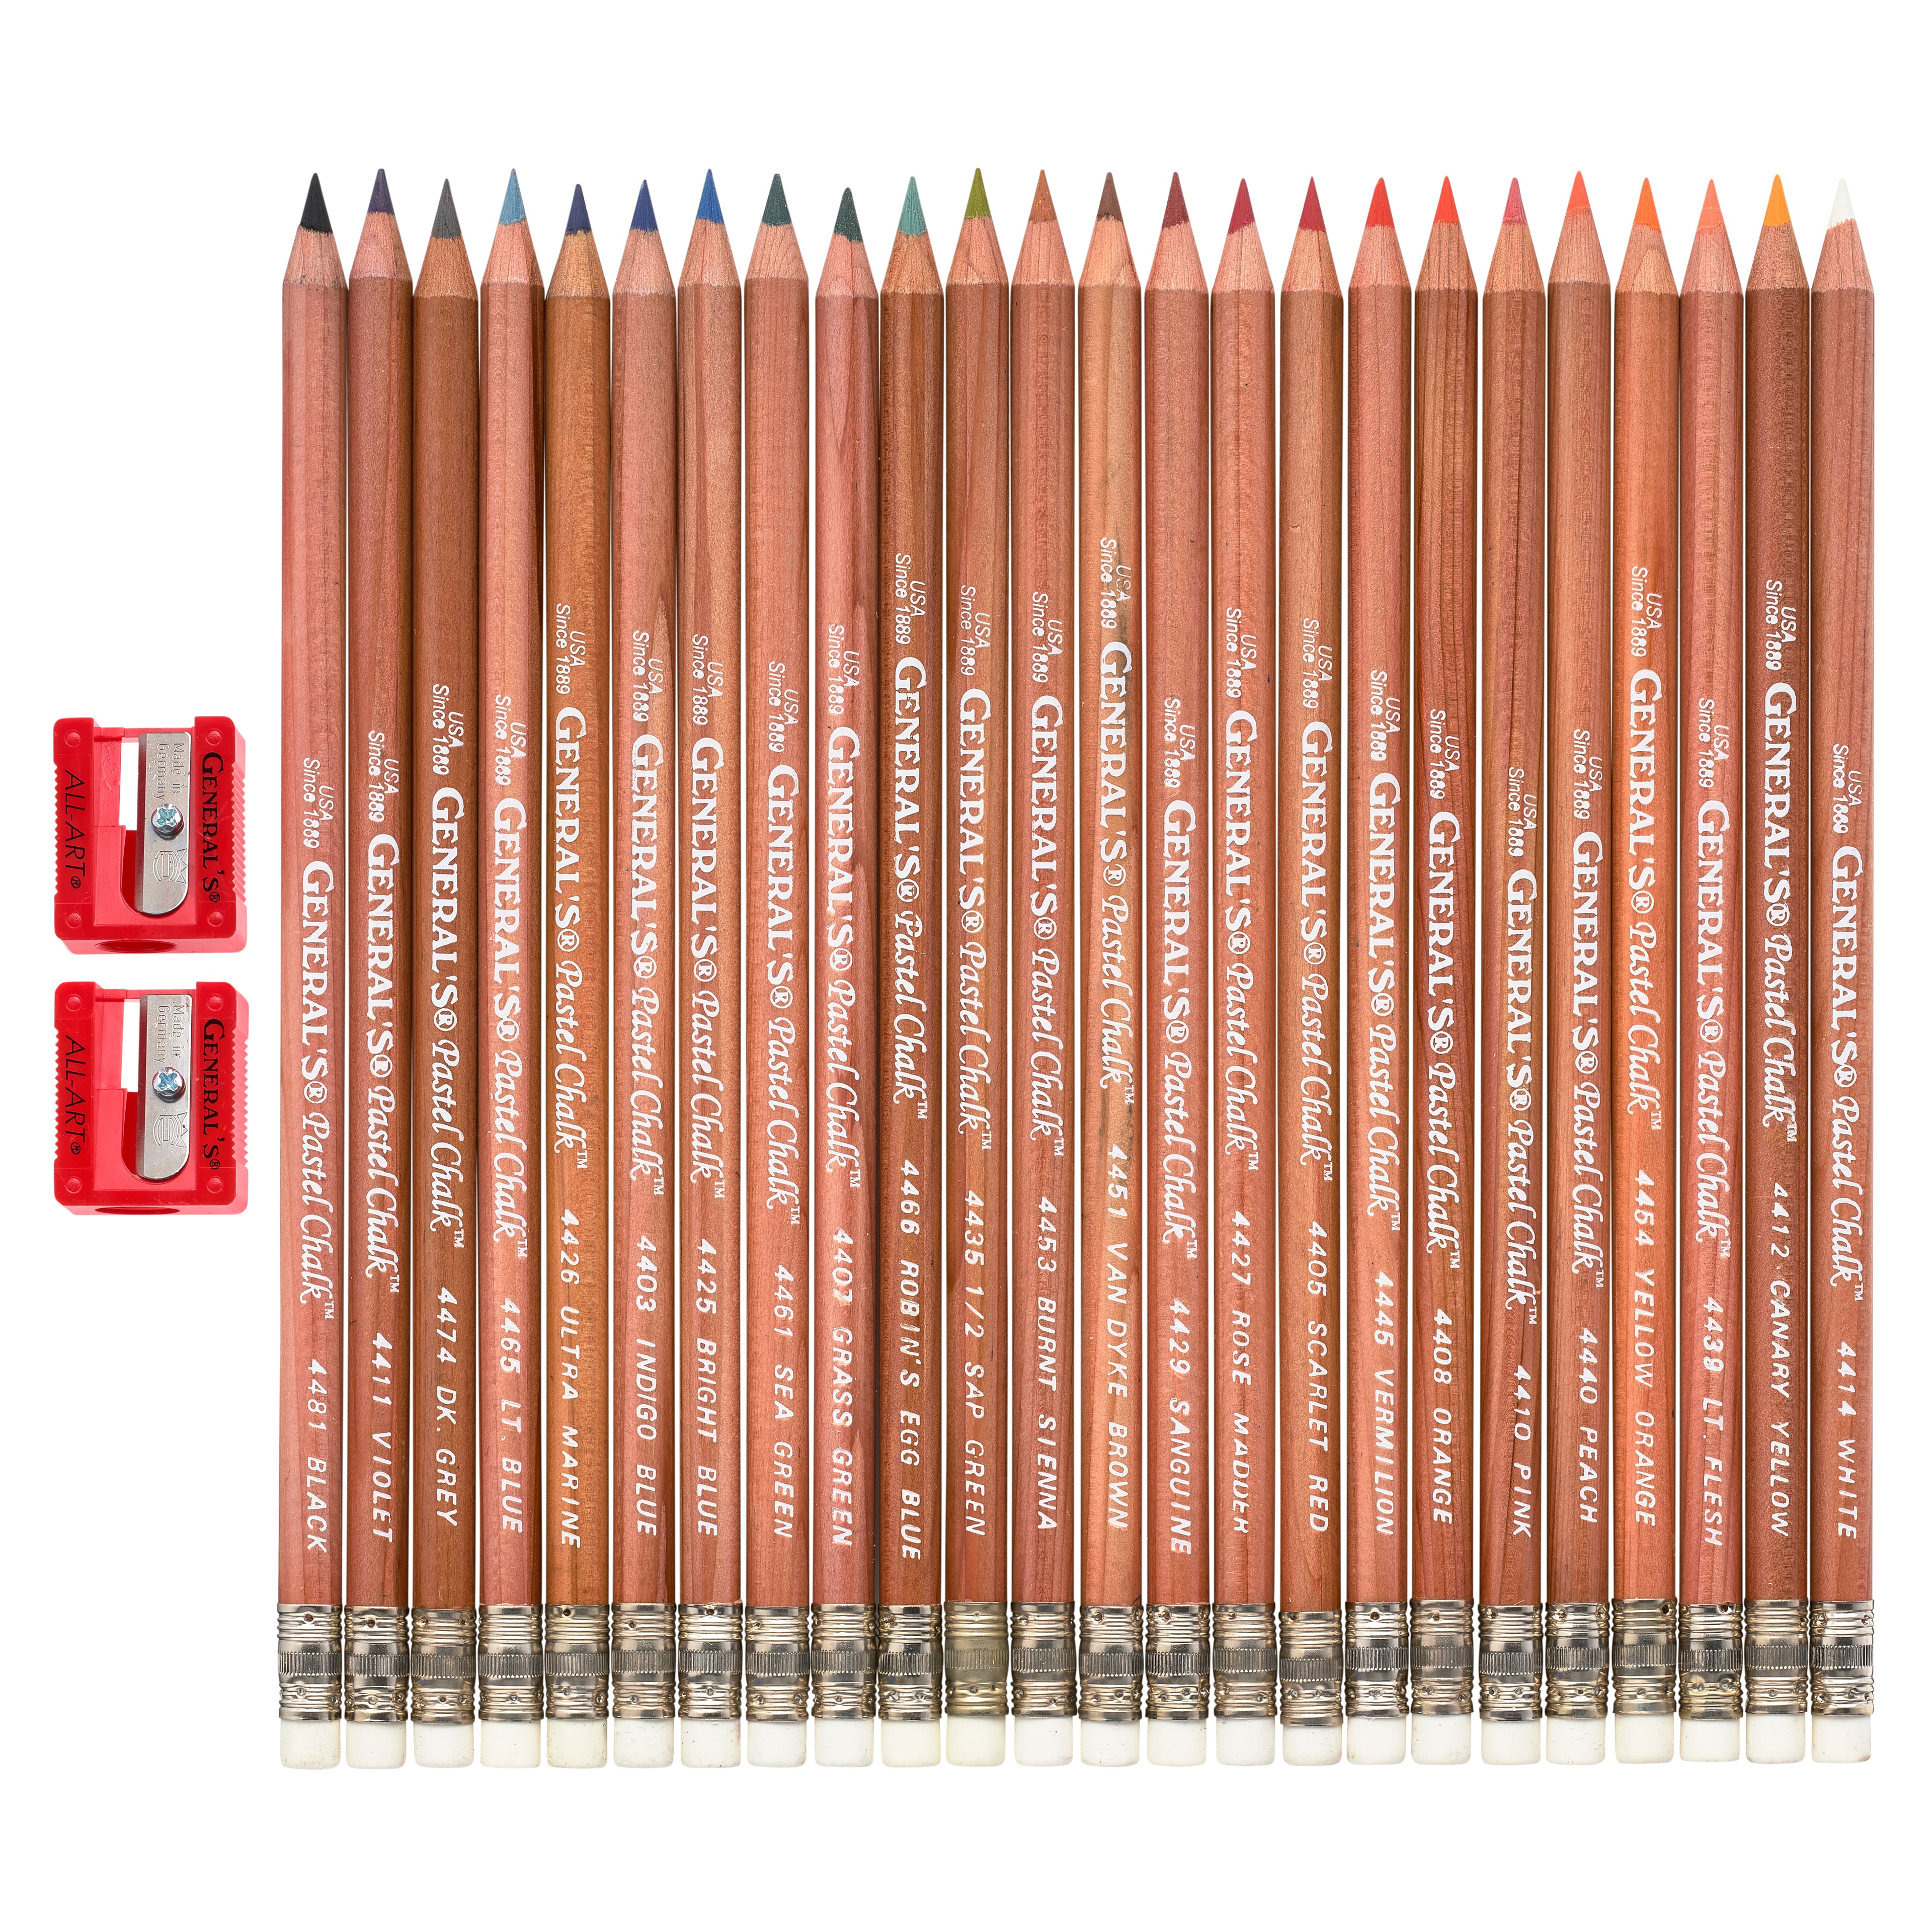 General's Multi-Pastel Chalk pencil in white - Maydel